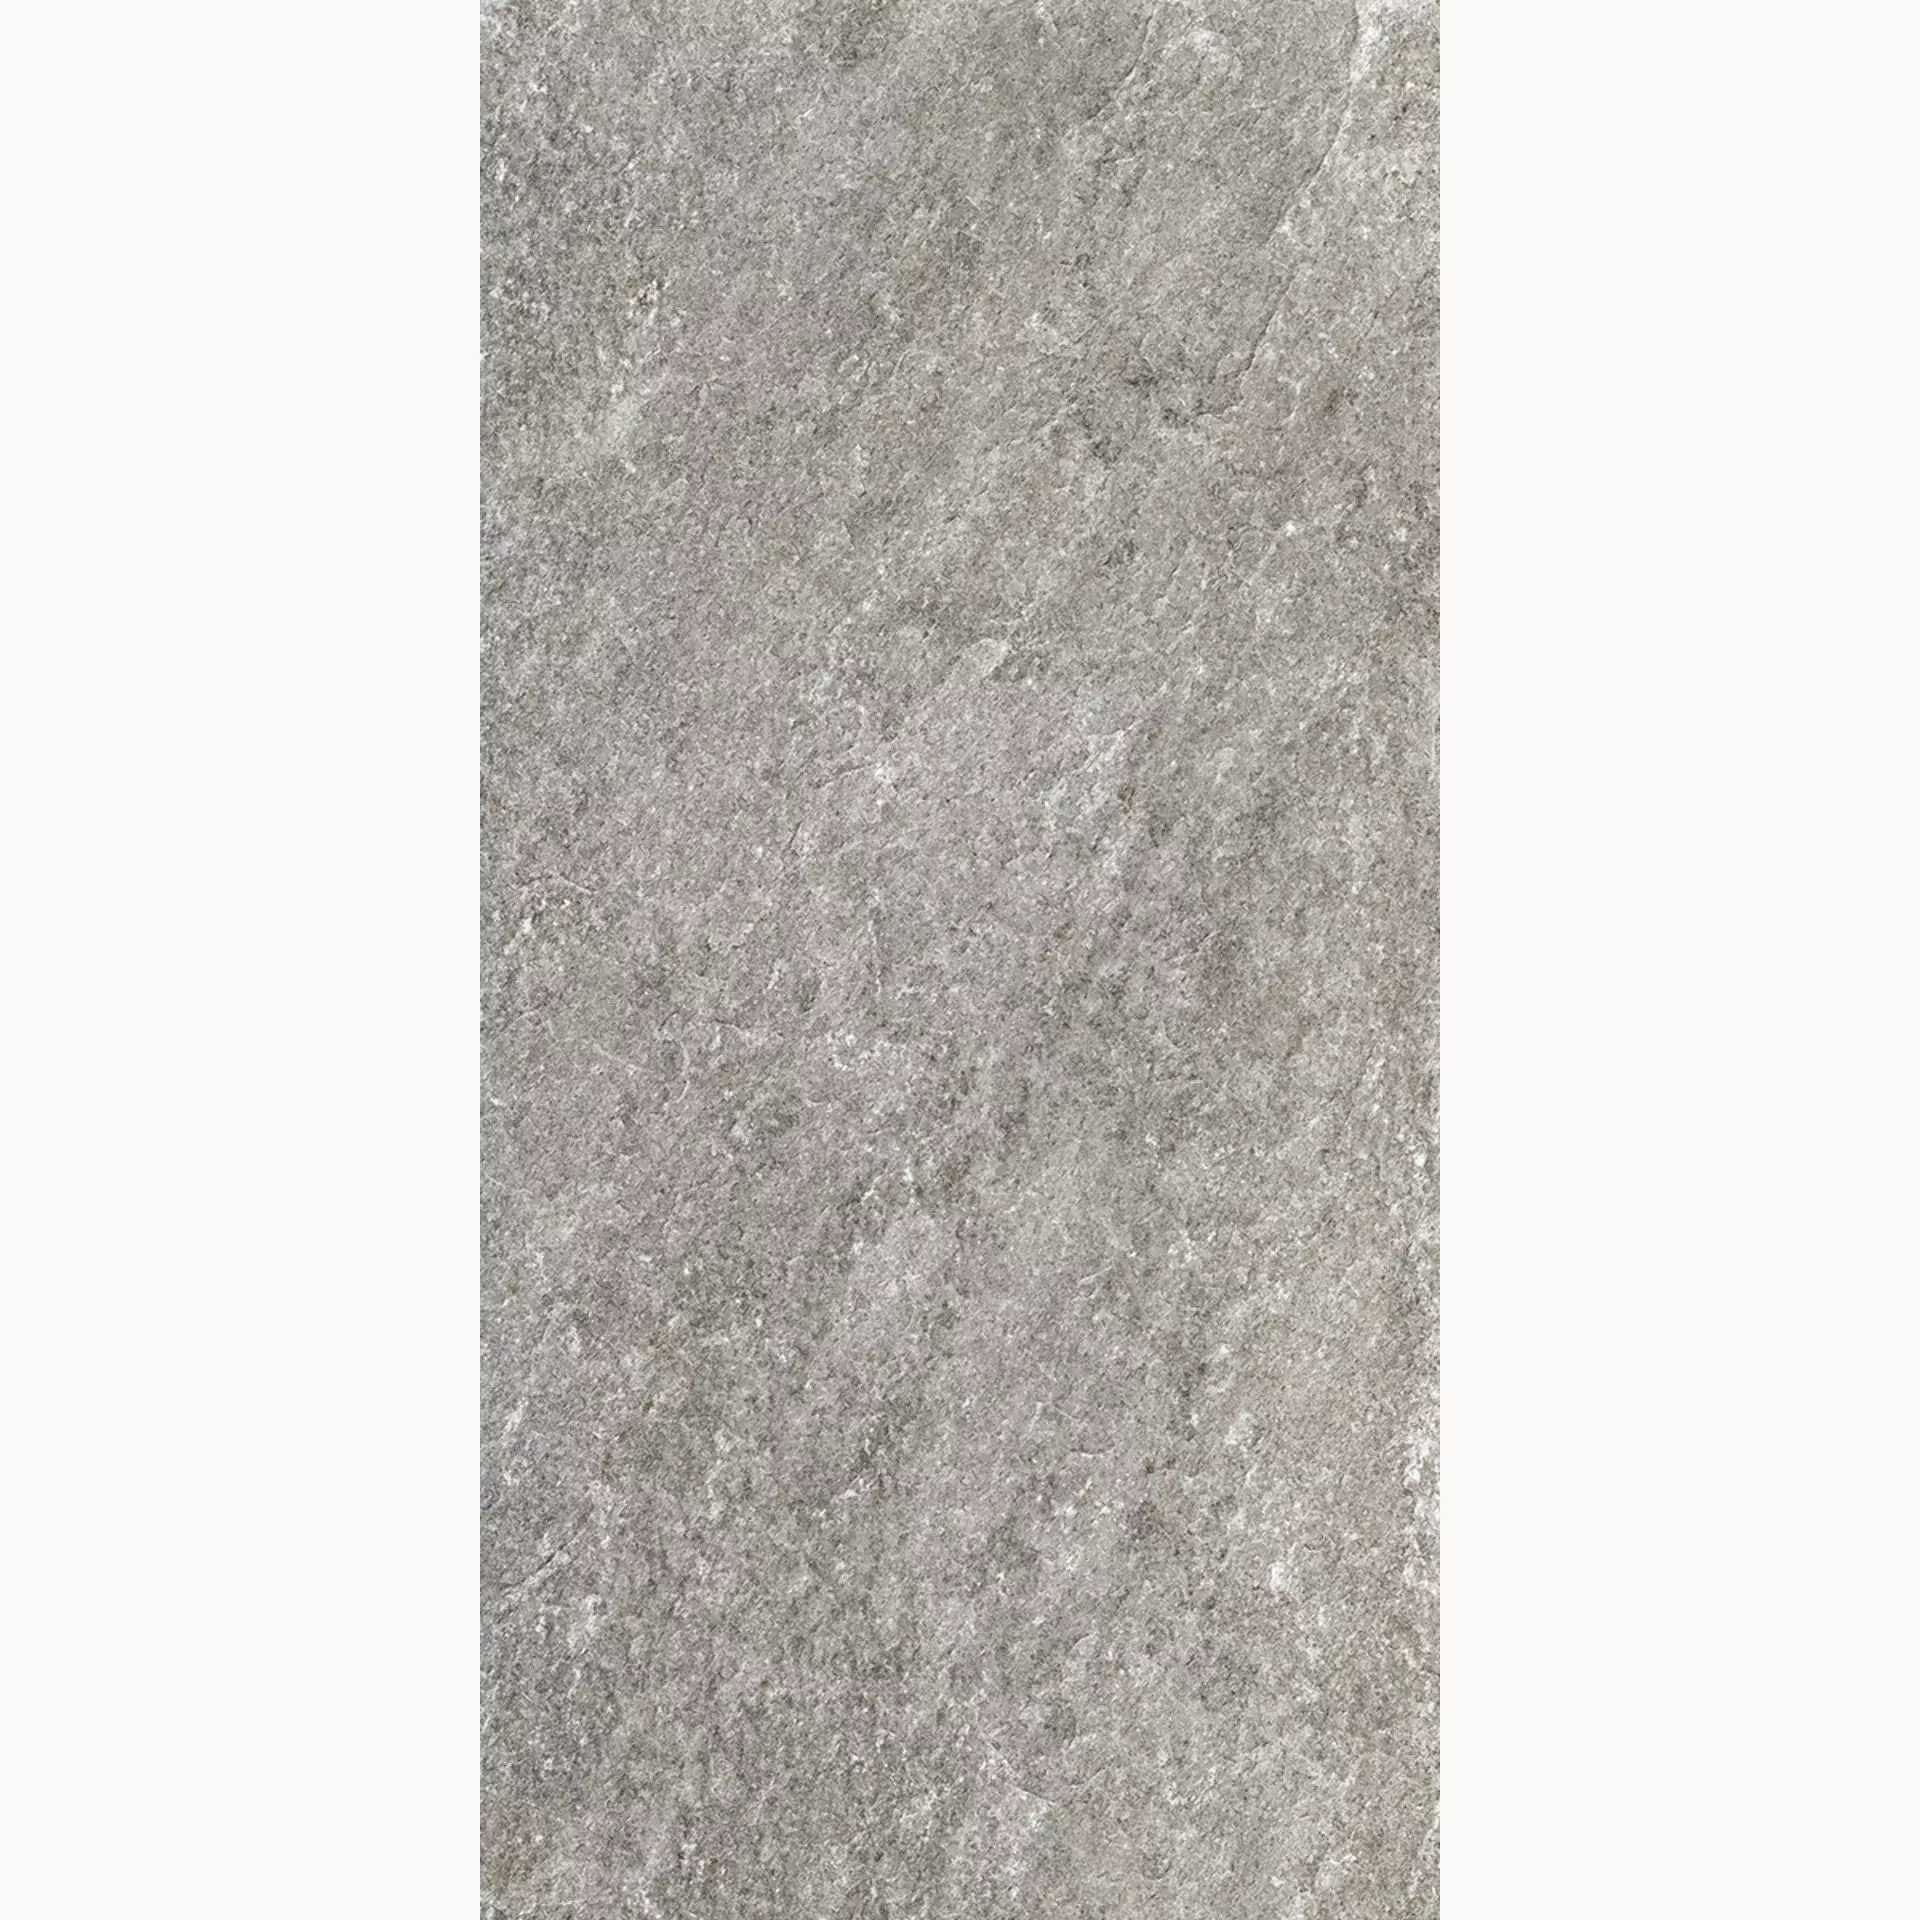 Rondine Quarzi Grey Naturale J87299 30x60cm rectified 9,5mm